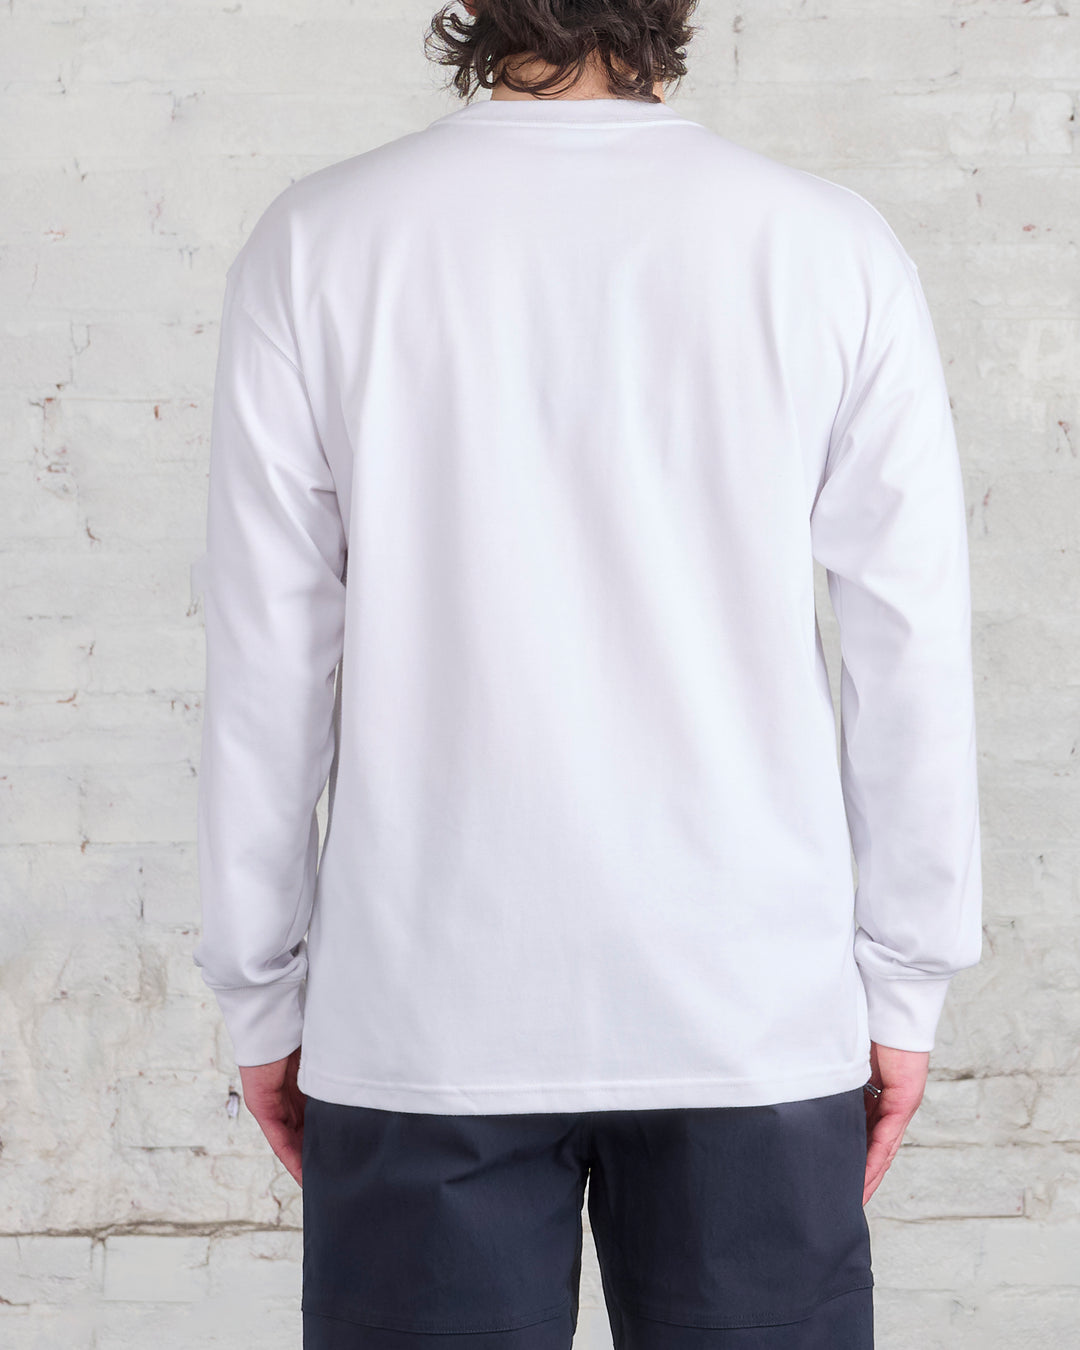 Nike ACG Lungs Long-Sleeve T-Shirt Summit White Black